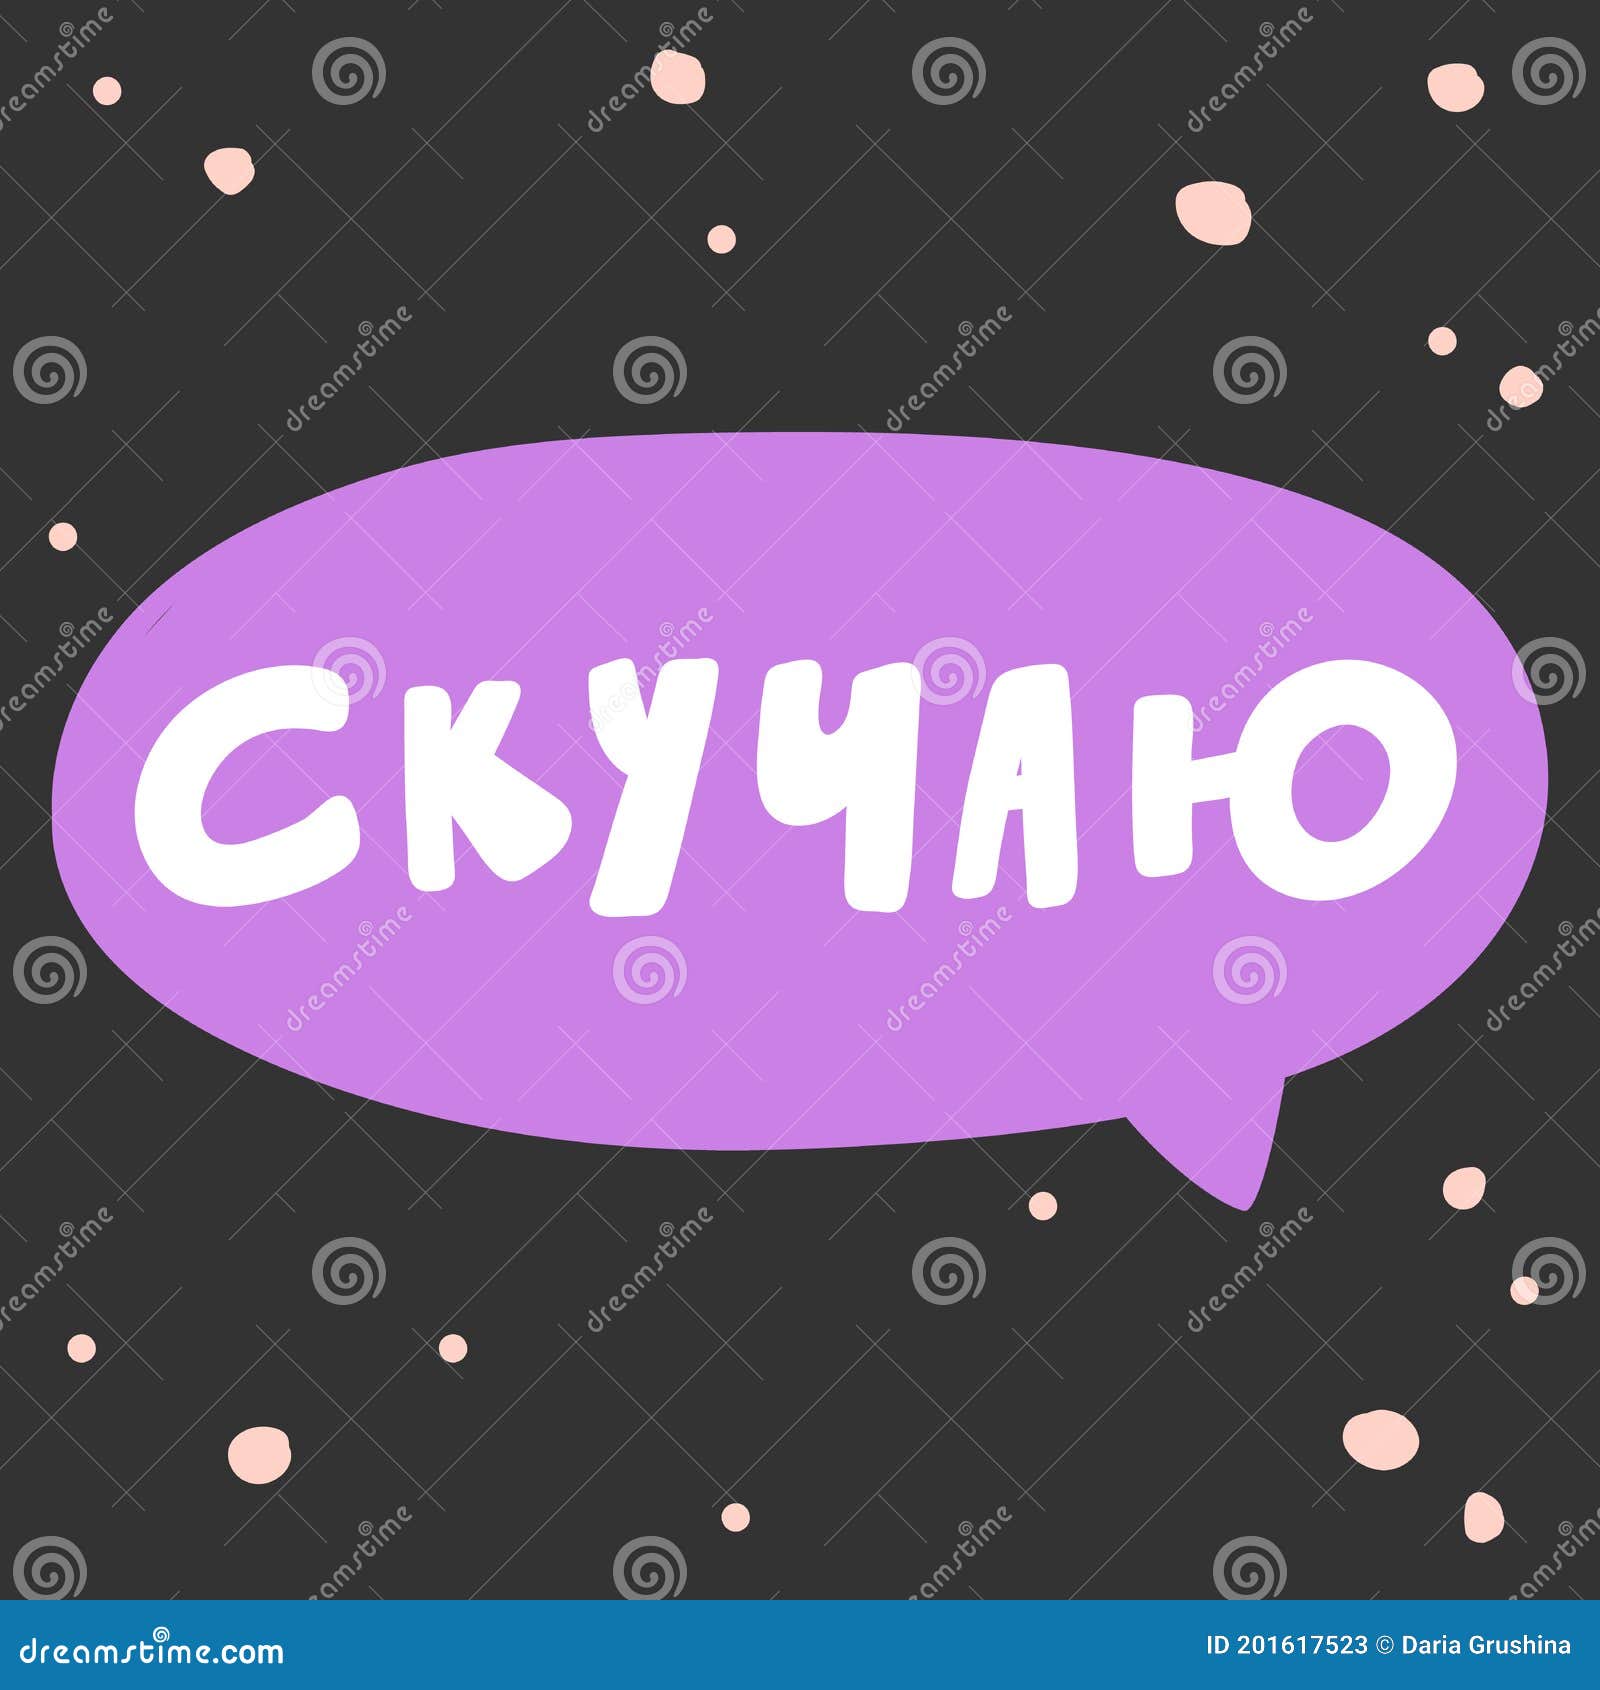 russian language to english